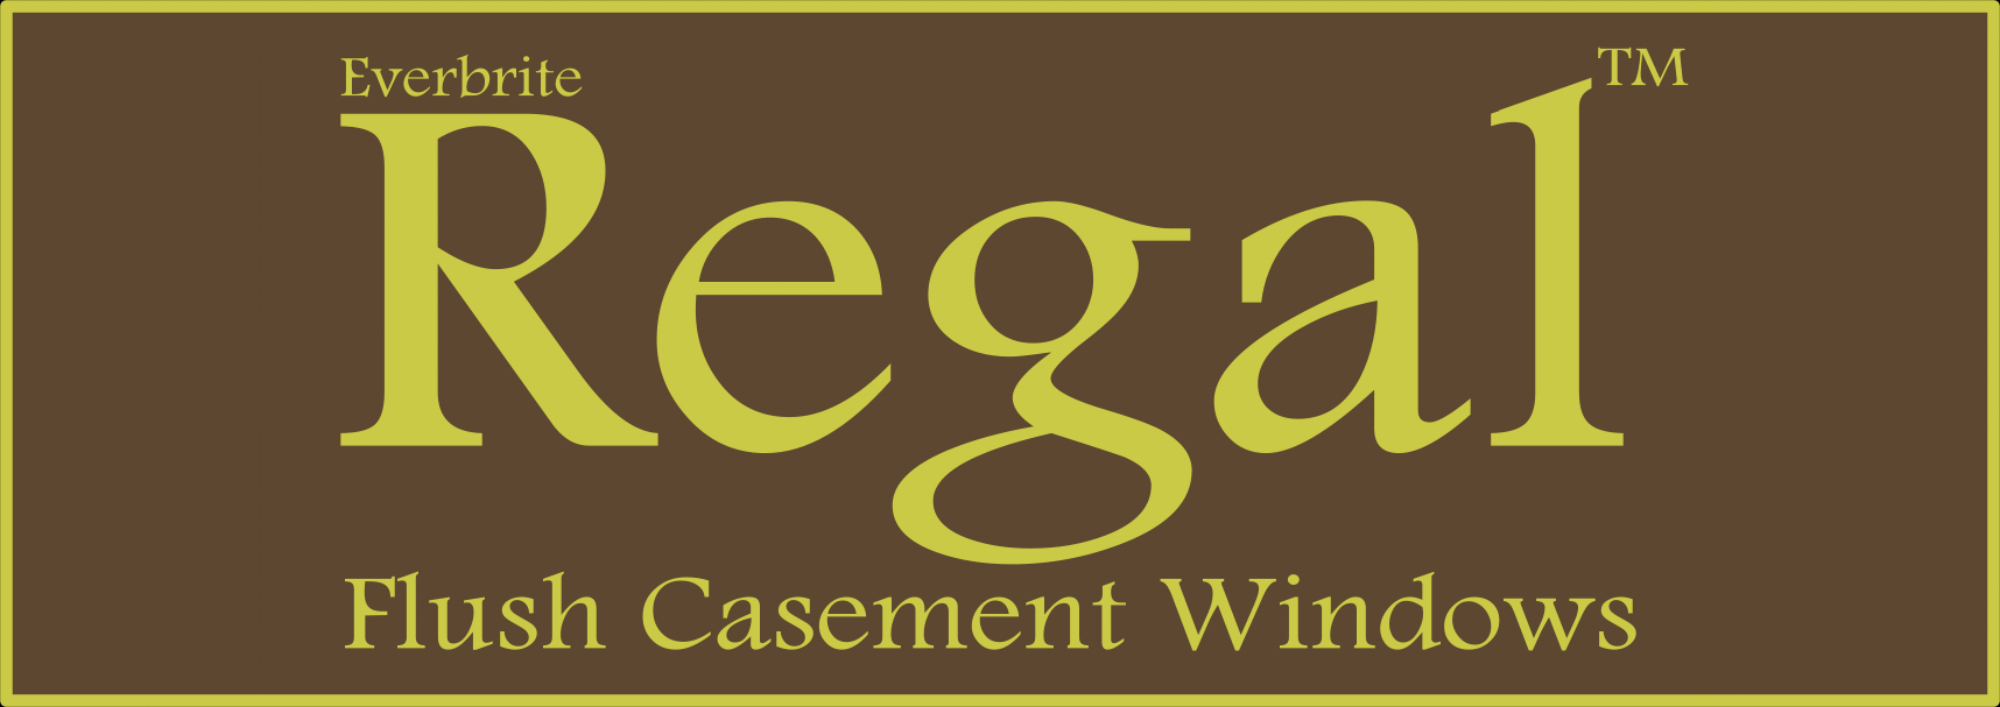 REGAL™ Flush Casement